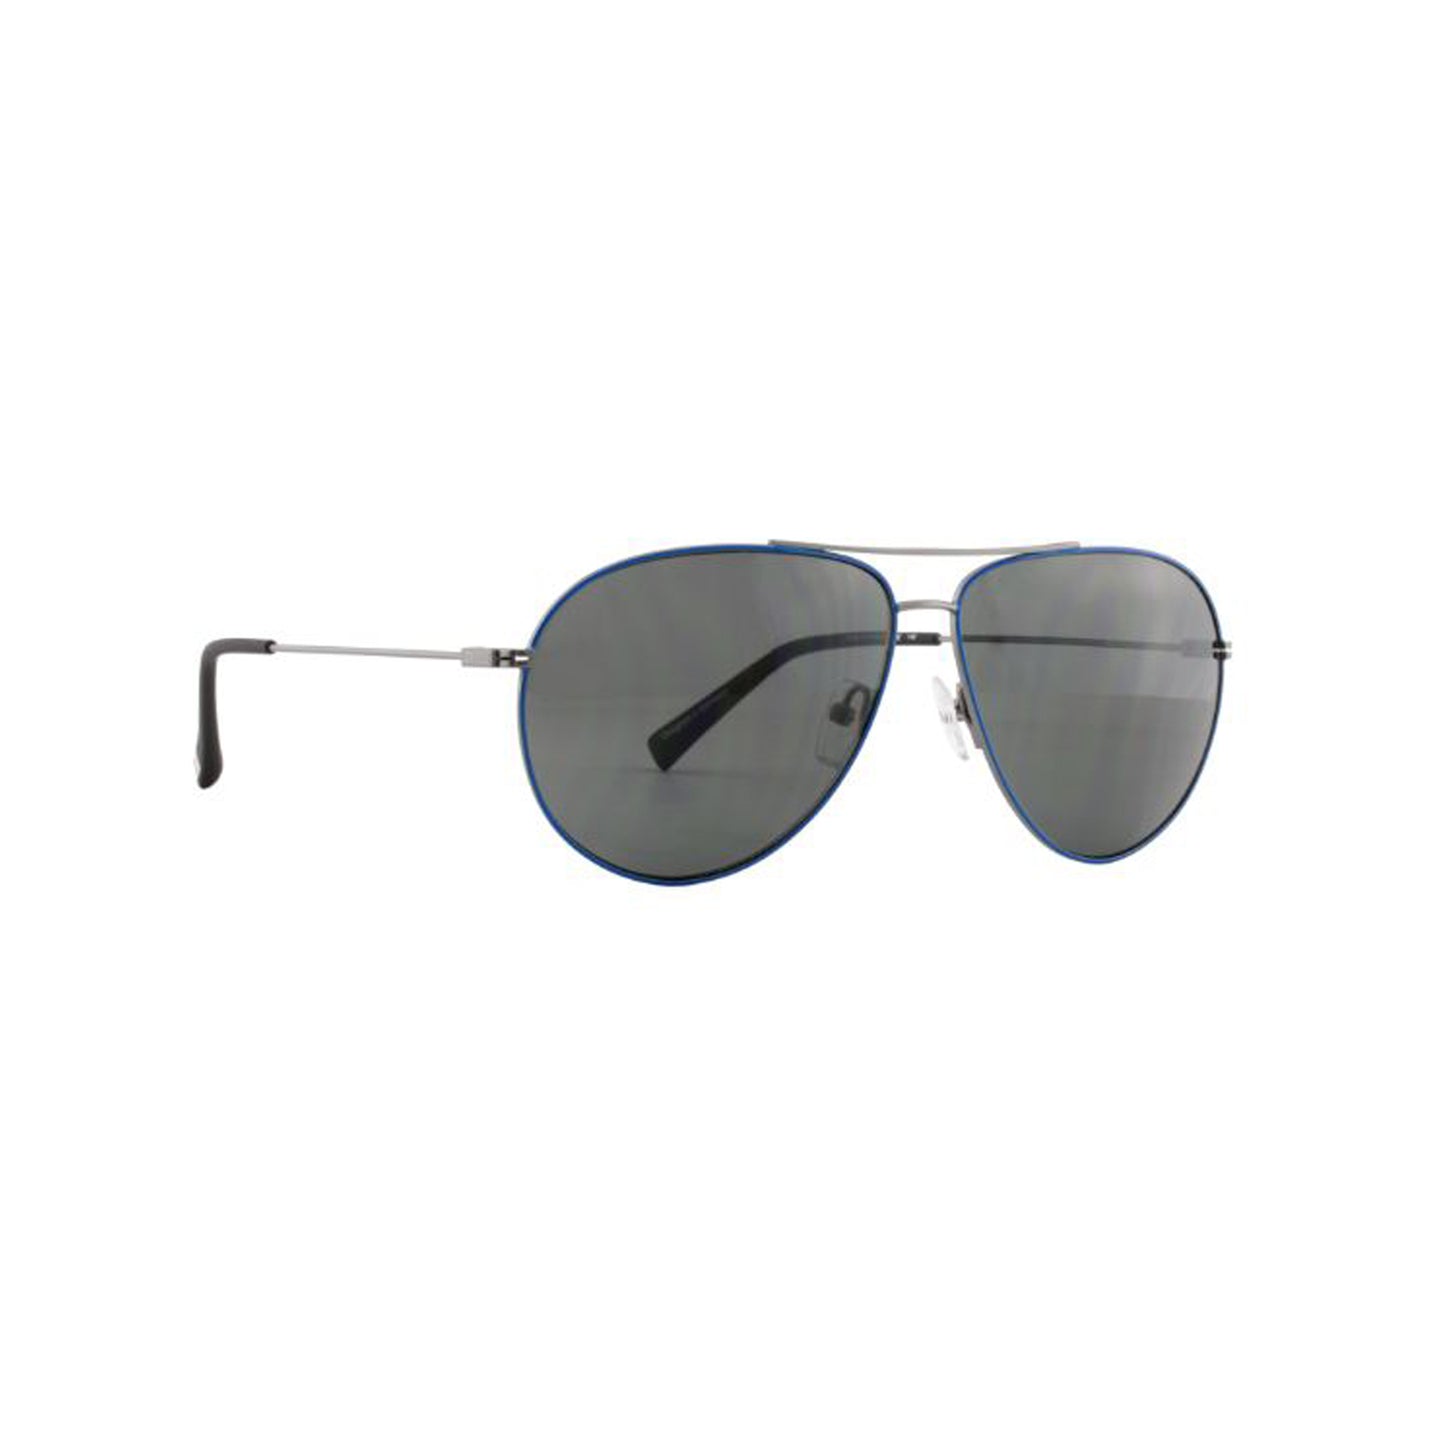 Zeiss Eyewear Blue Aviator Metal Full Rim Sunglasses. Made in Germany ZS94006-Y22